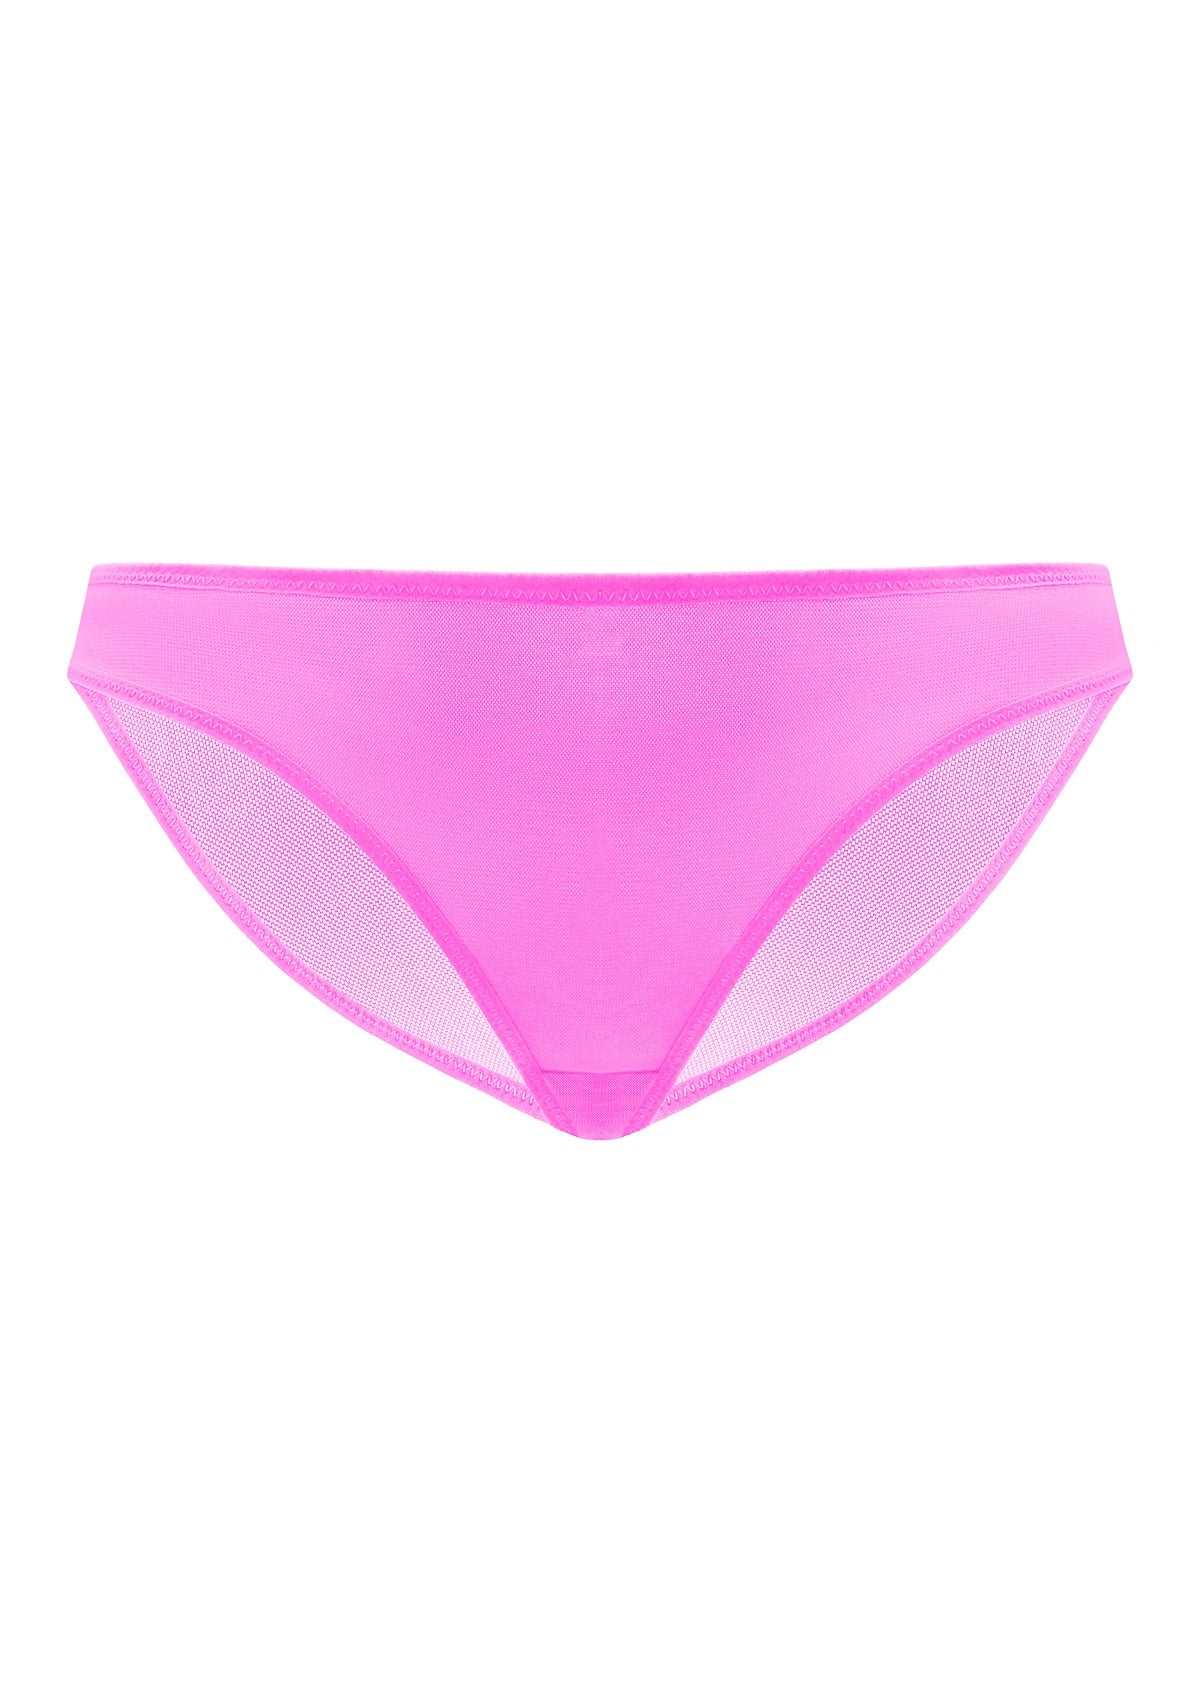 HSIA Billie Low Rise Breathable Soft Sheer Mesh Bikini Underwear - L / Barbie Pink